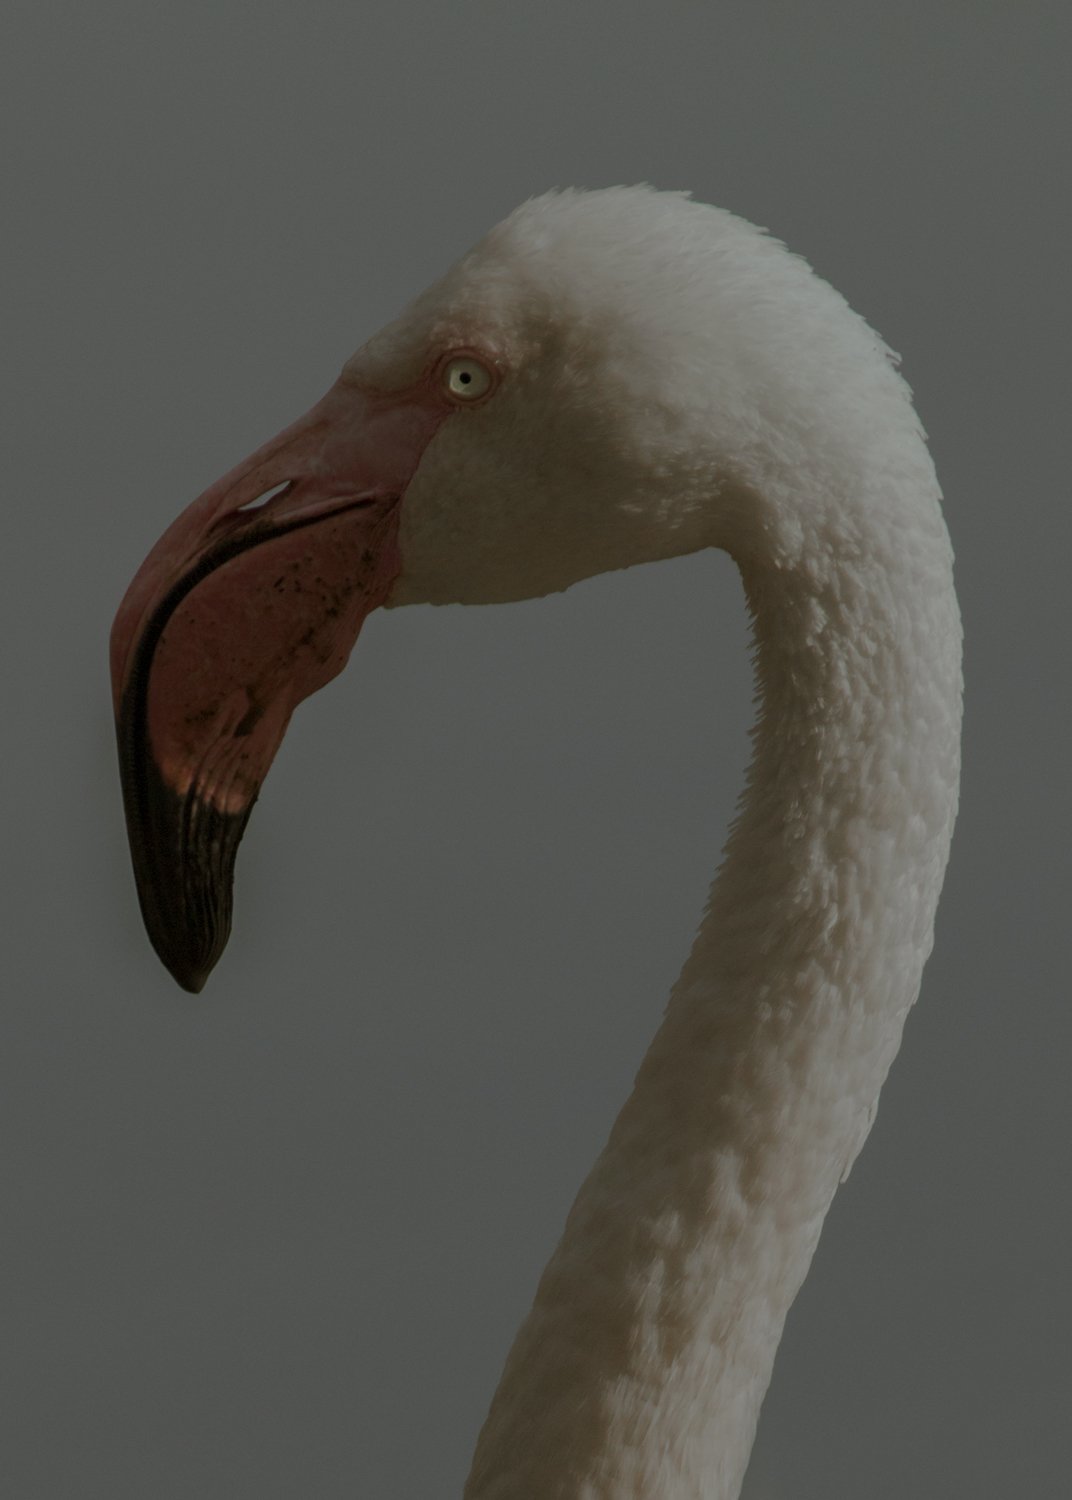 The Portrait of a Bird